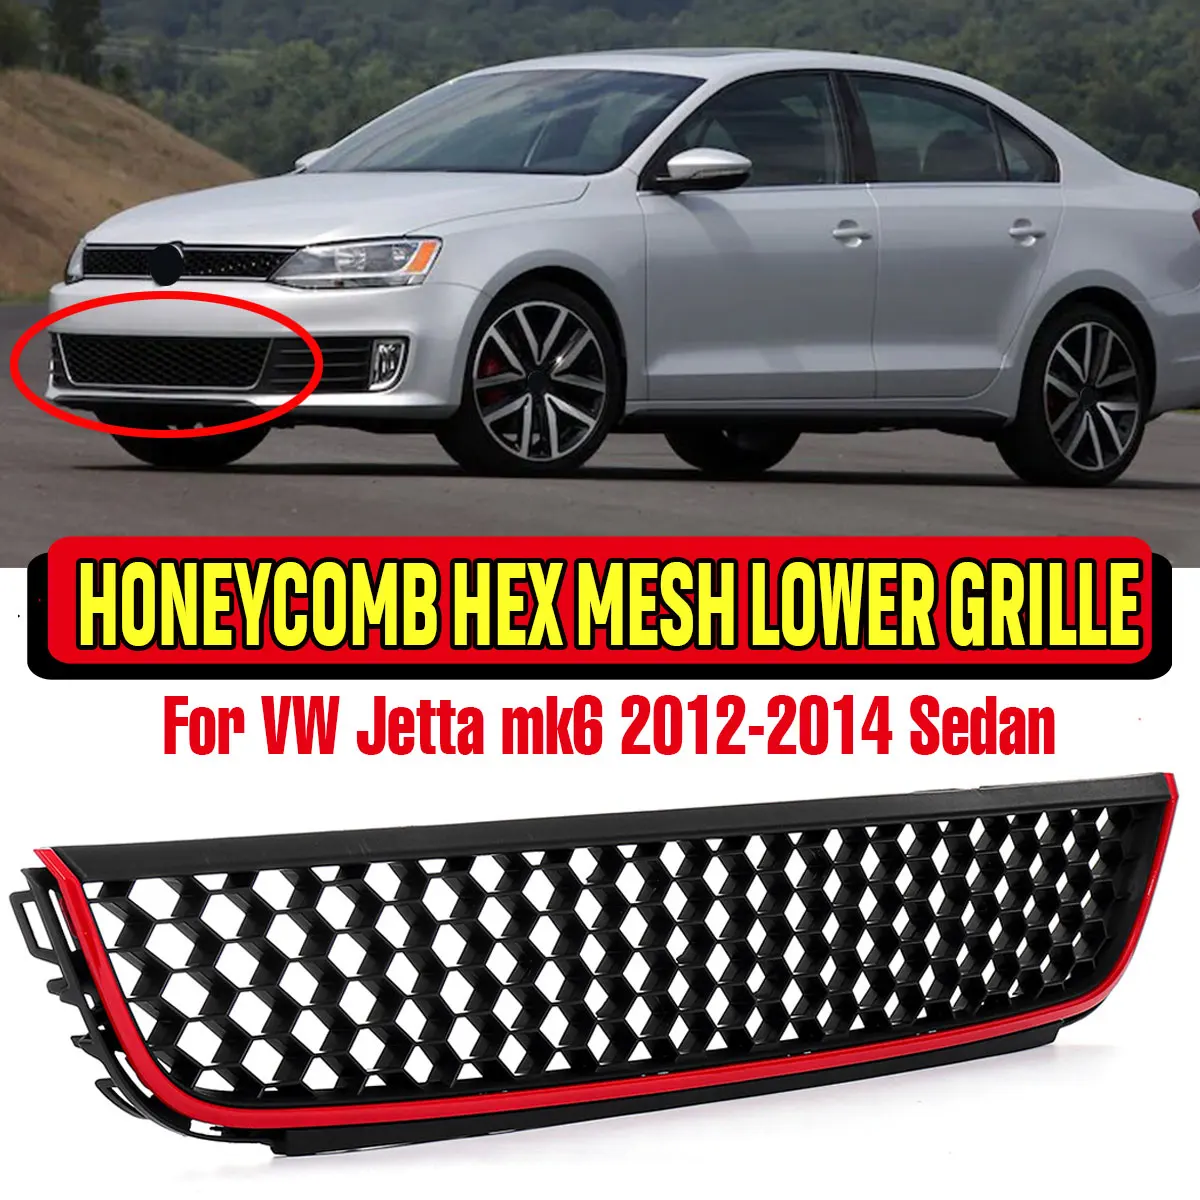 

mk6 Car Honeycomb Hex Mesh Front Bumper Lower Grills Racing Grills For VOLKSWAGEN For VW Jetta mk6 2012-2014 Sedan Front Grille